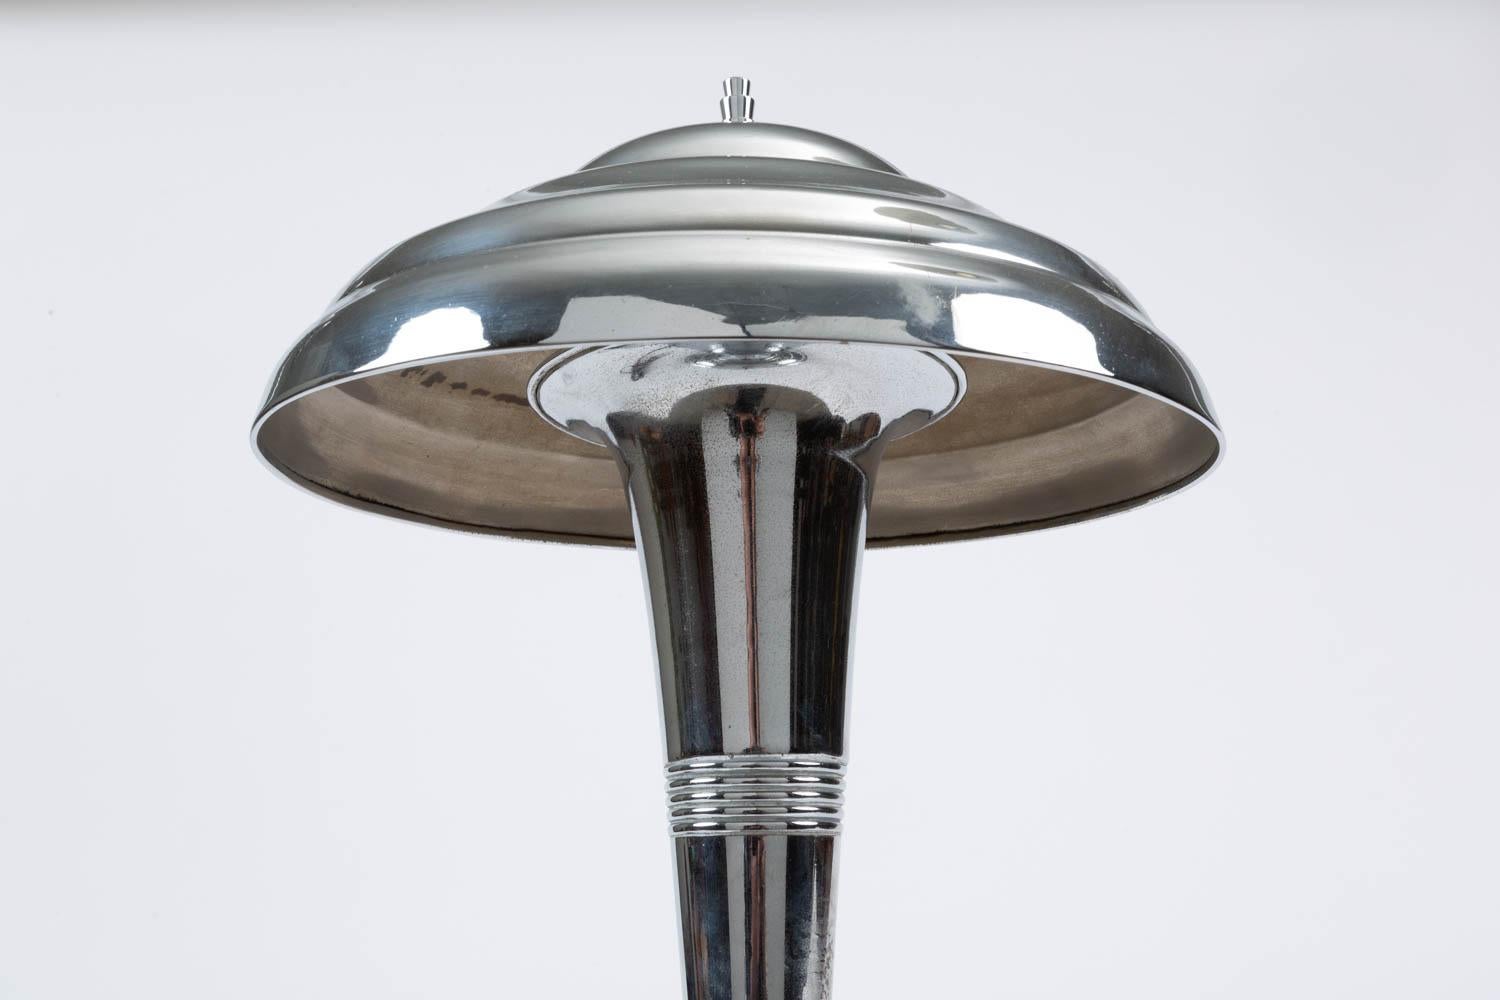 Chrome Art Deco Table Lamp with Saucer Shade 1